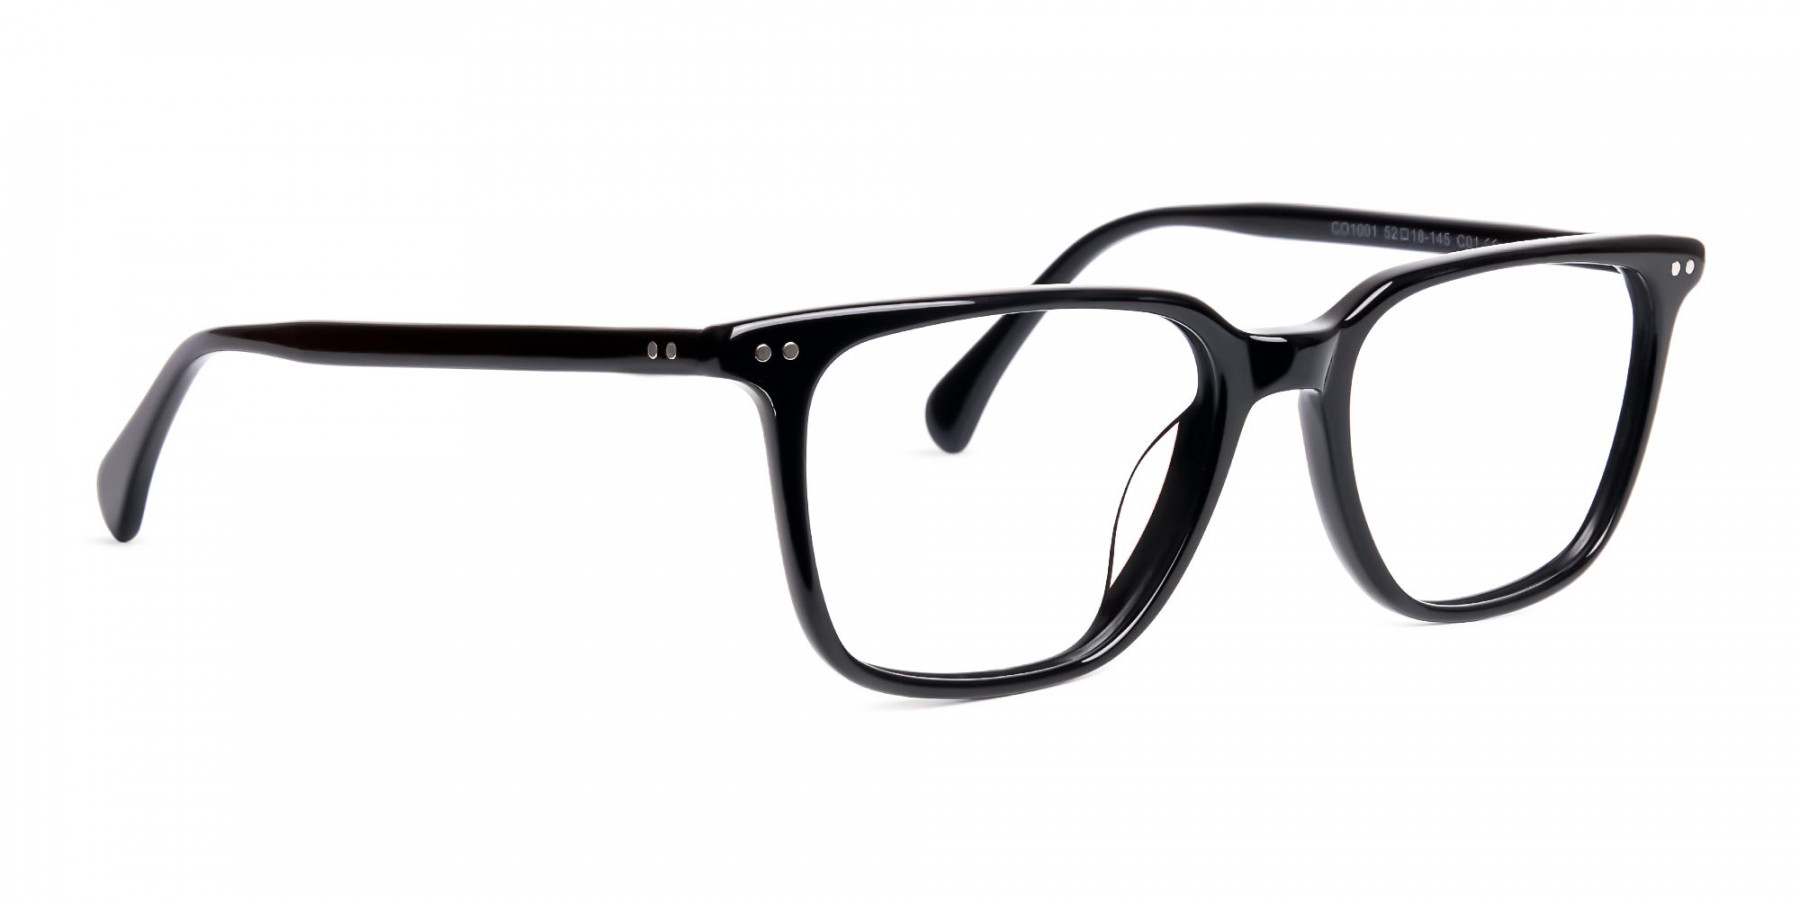 Black Rectangular Wayfarer Glasses Frames Darcy 1 Specscart ®